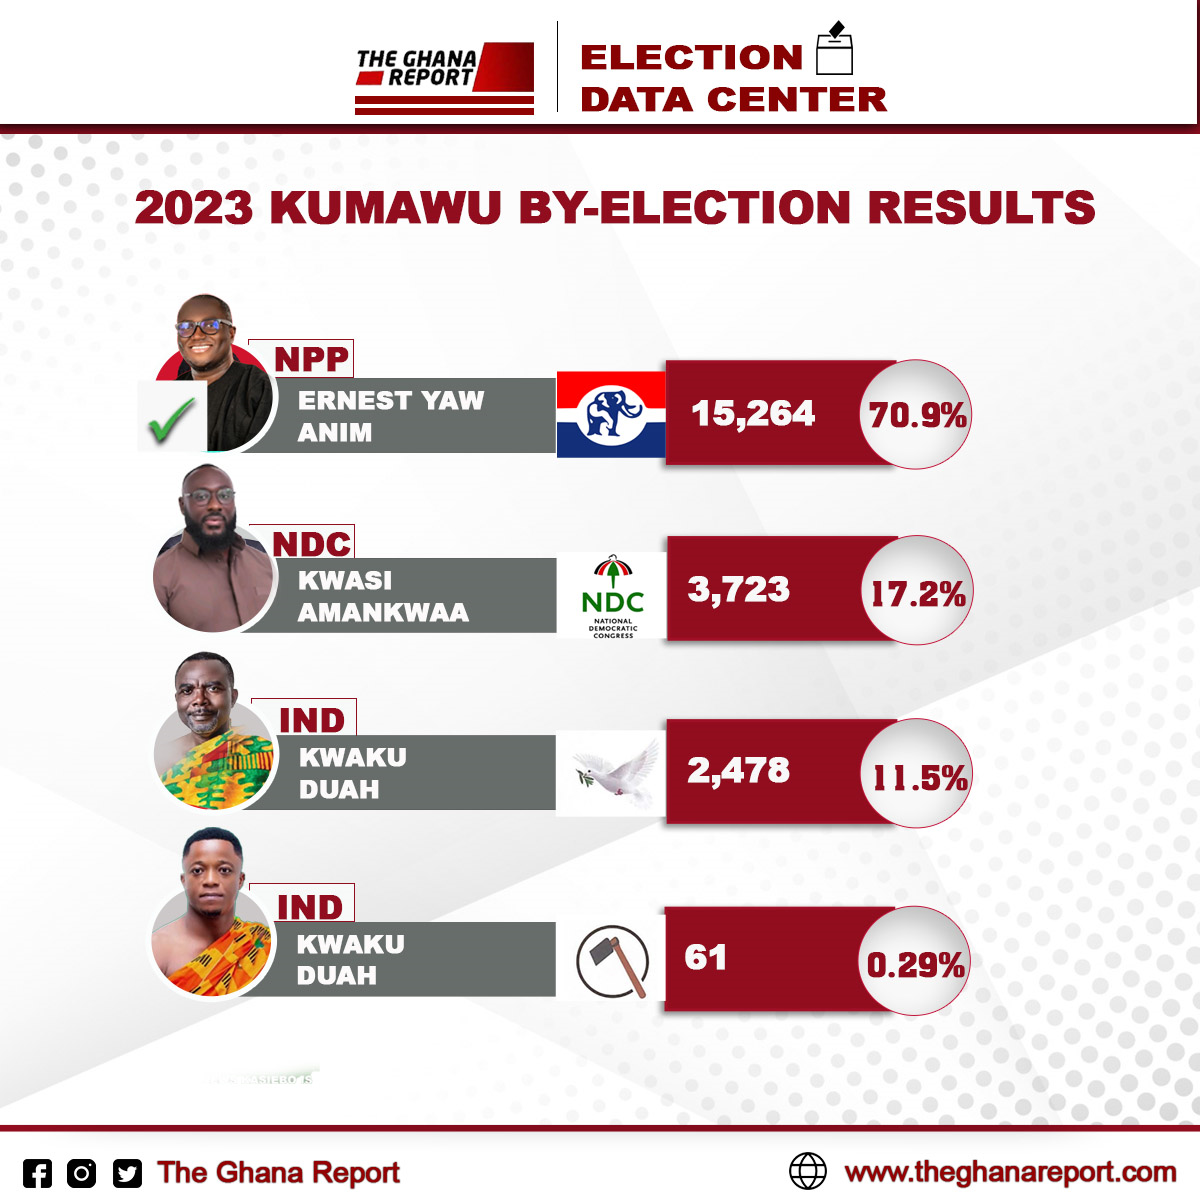 Ernest Yaw Annim wins Kumawu byelection with over 70 votes